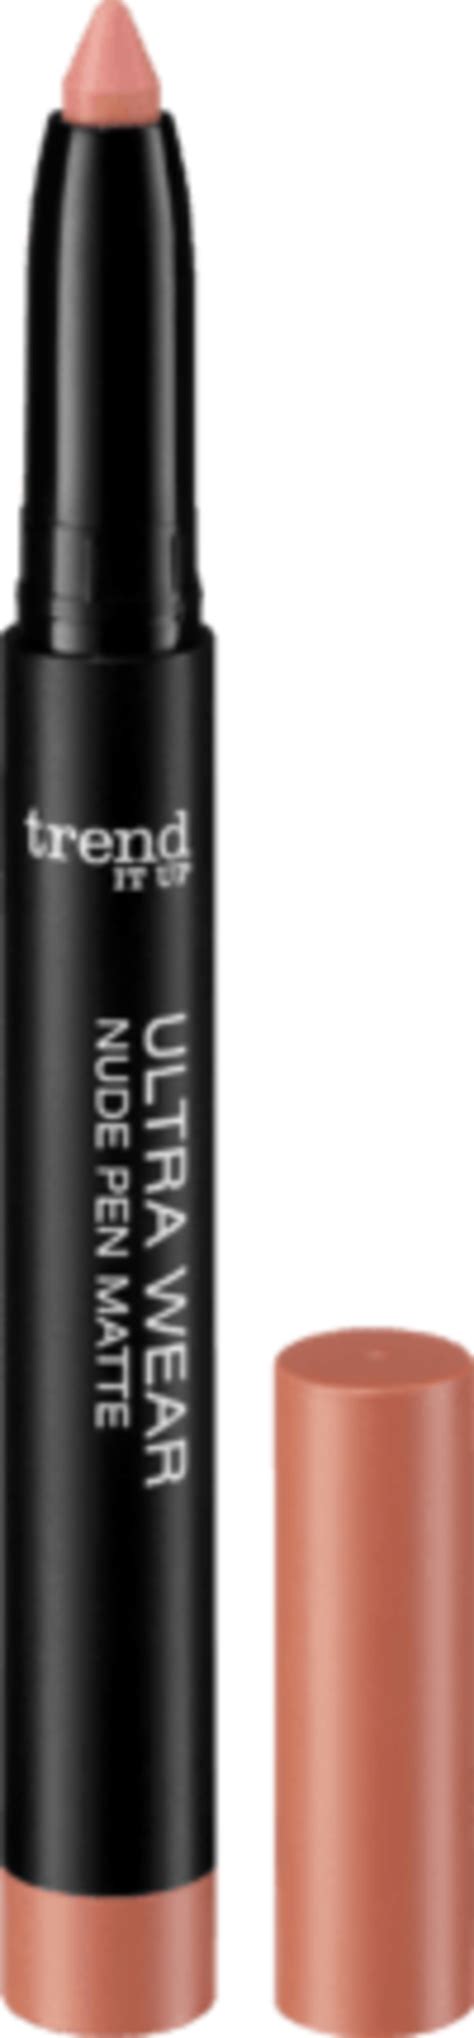 Trend It Up Lippenstift Ultra Wear Nude Pen Matte Von Dm Ansehen